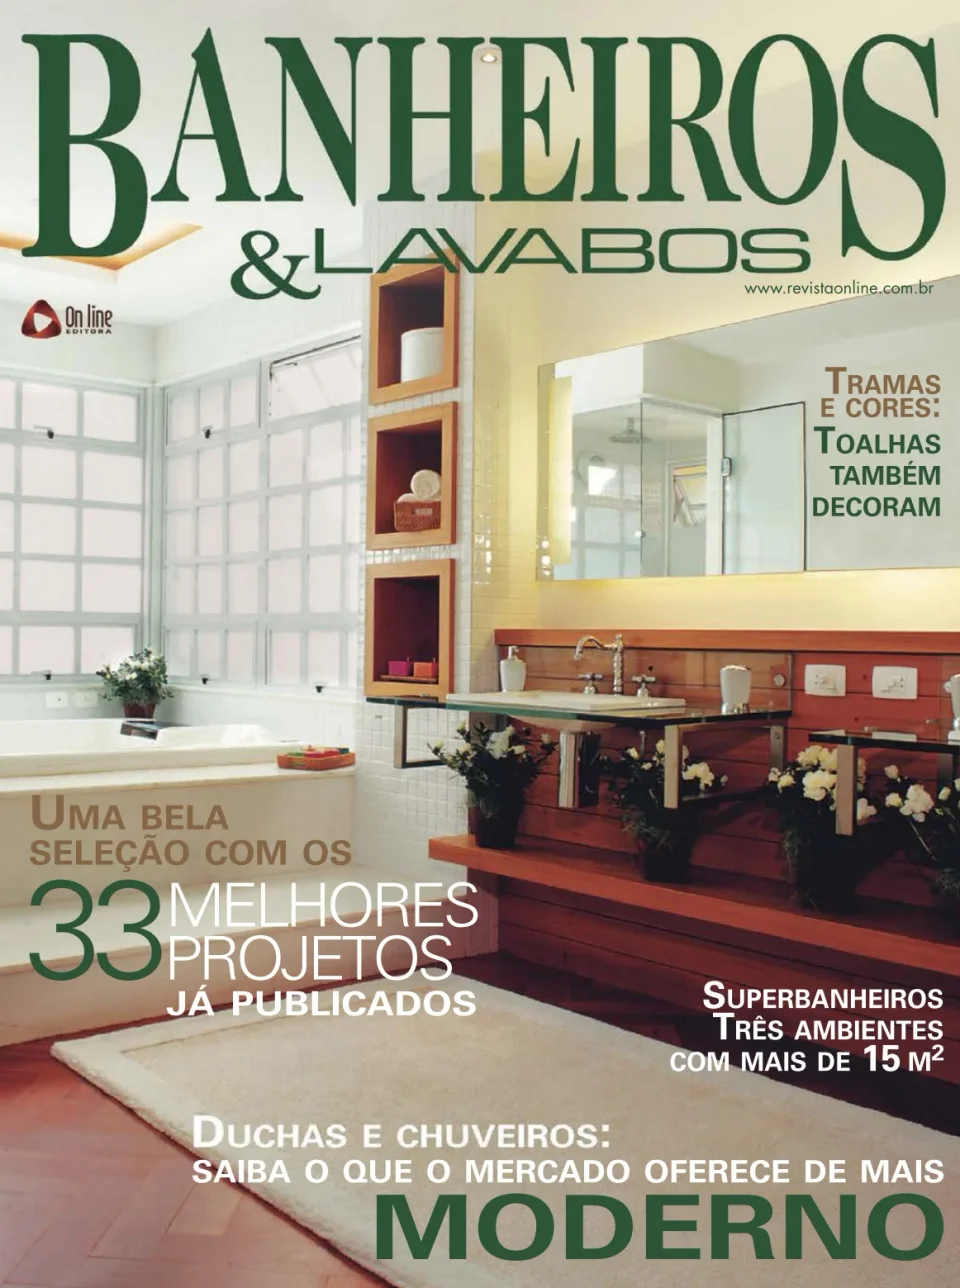 Banheiros & Lavabos